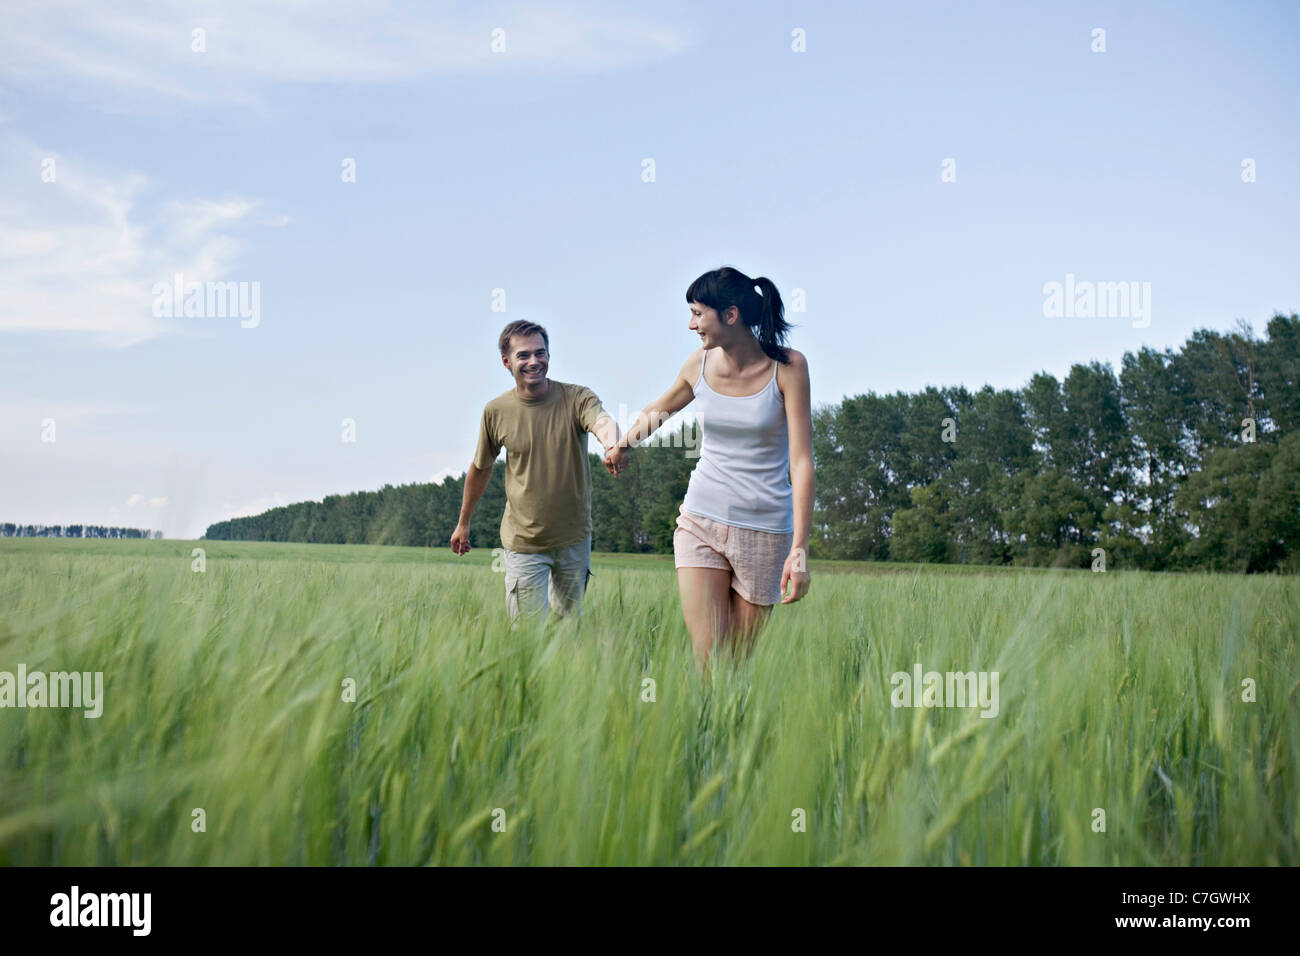 A woman pulling her boyfriend through a field Stock Photo